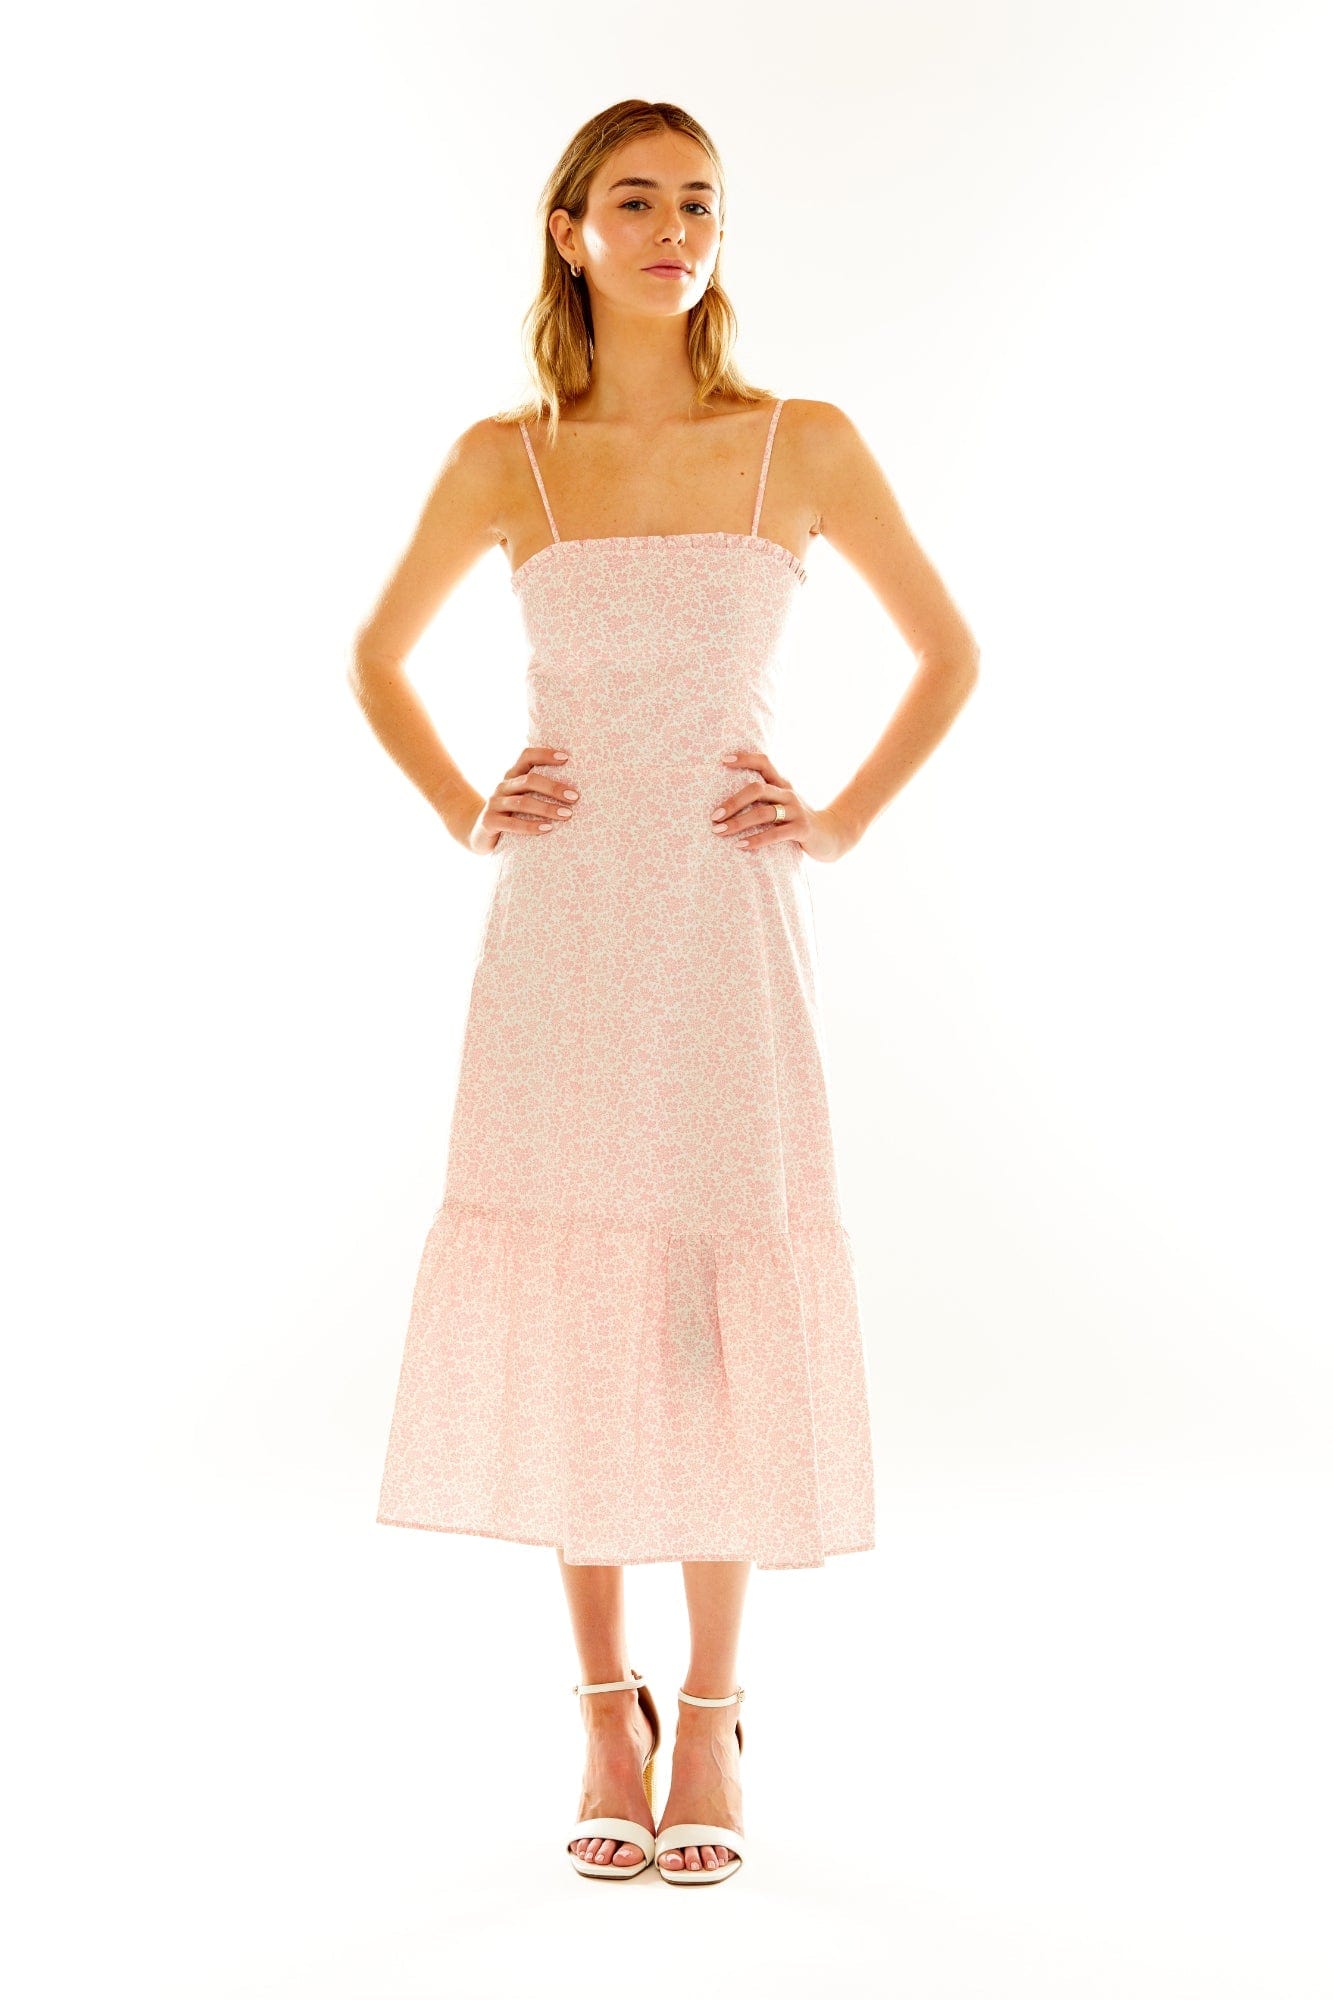 Willard Road Dress The Maggie Dress in Primrose Pink